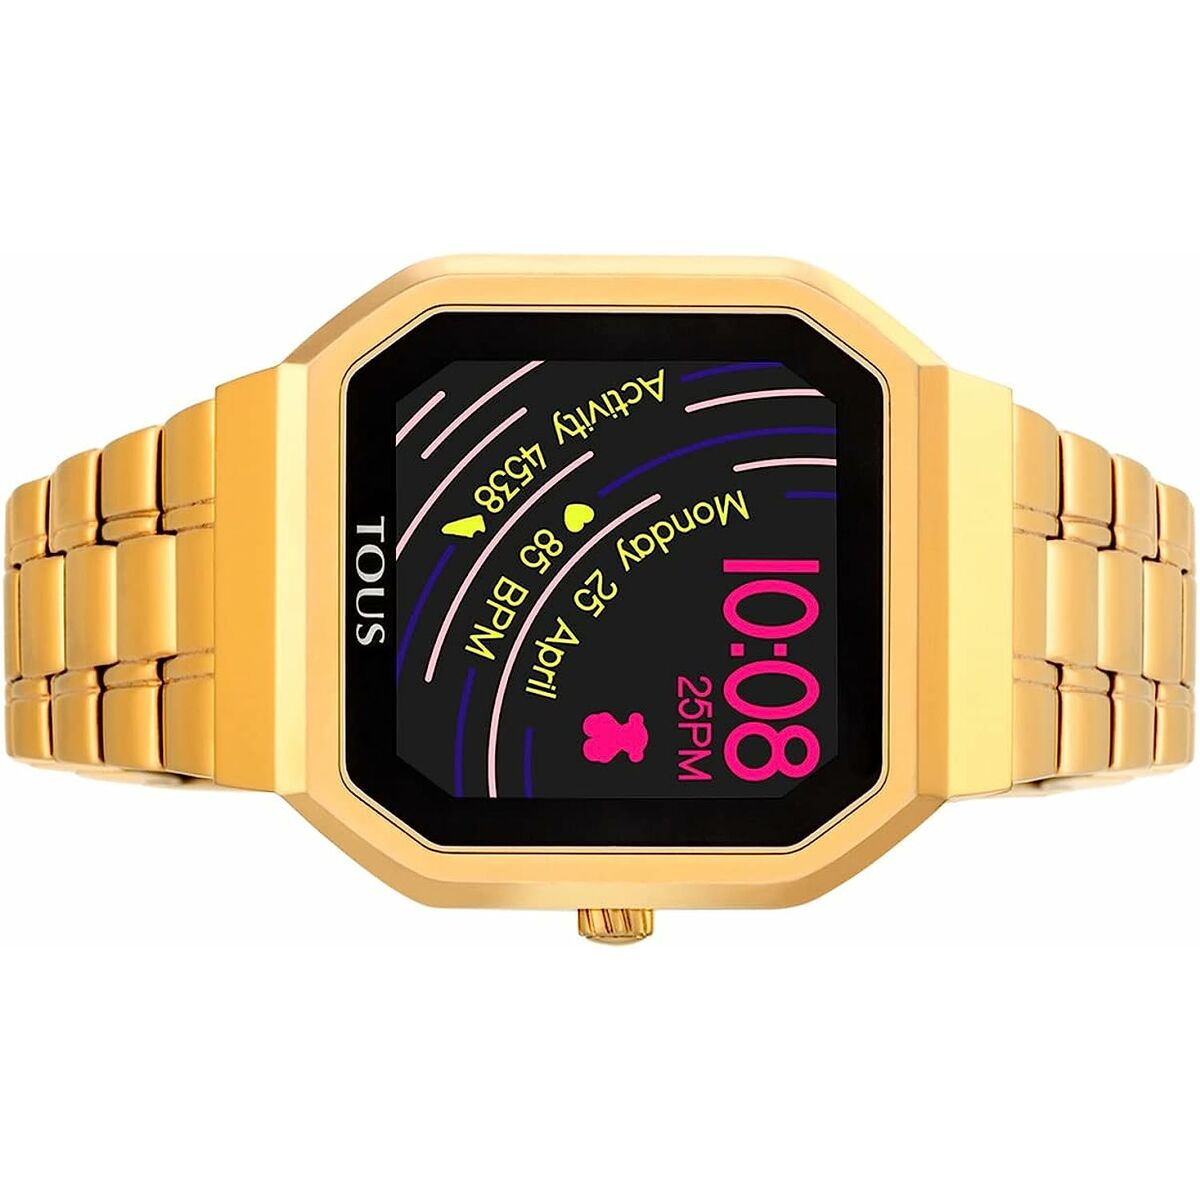 Kaufe Smartwatch Tous 100350700 bei AWK Flagship um € 242.00